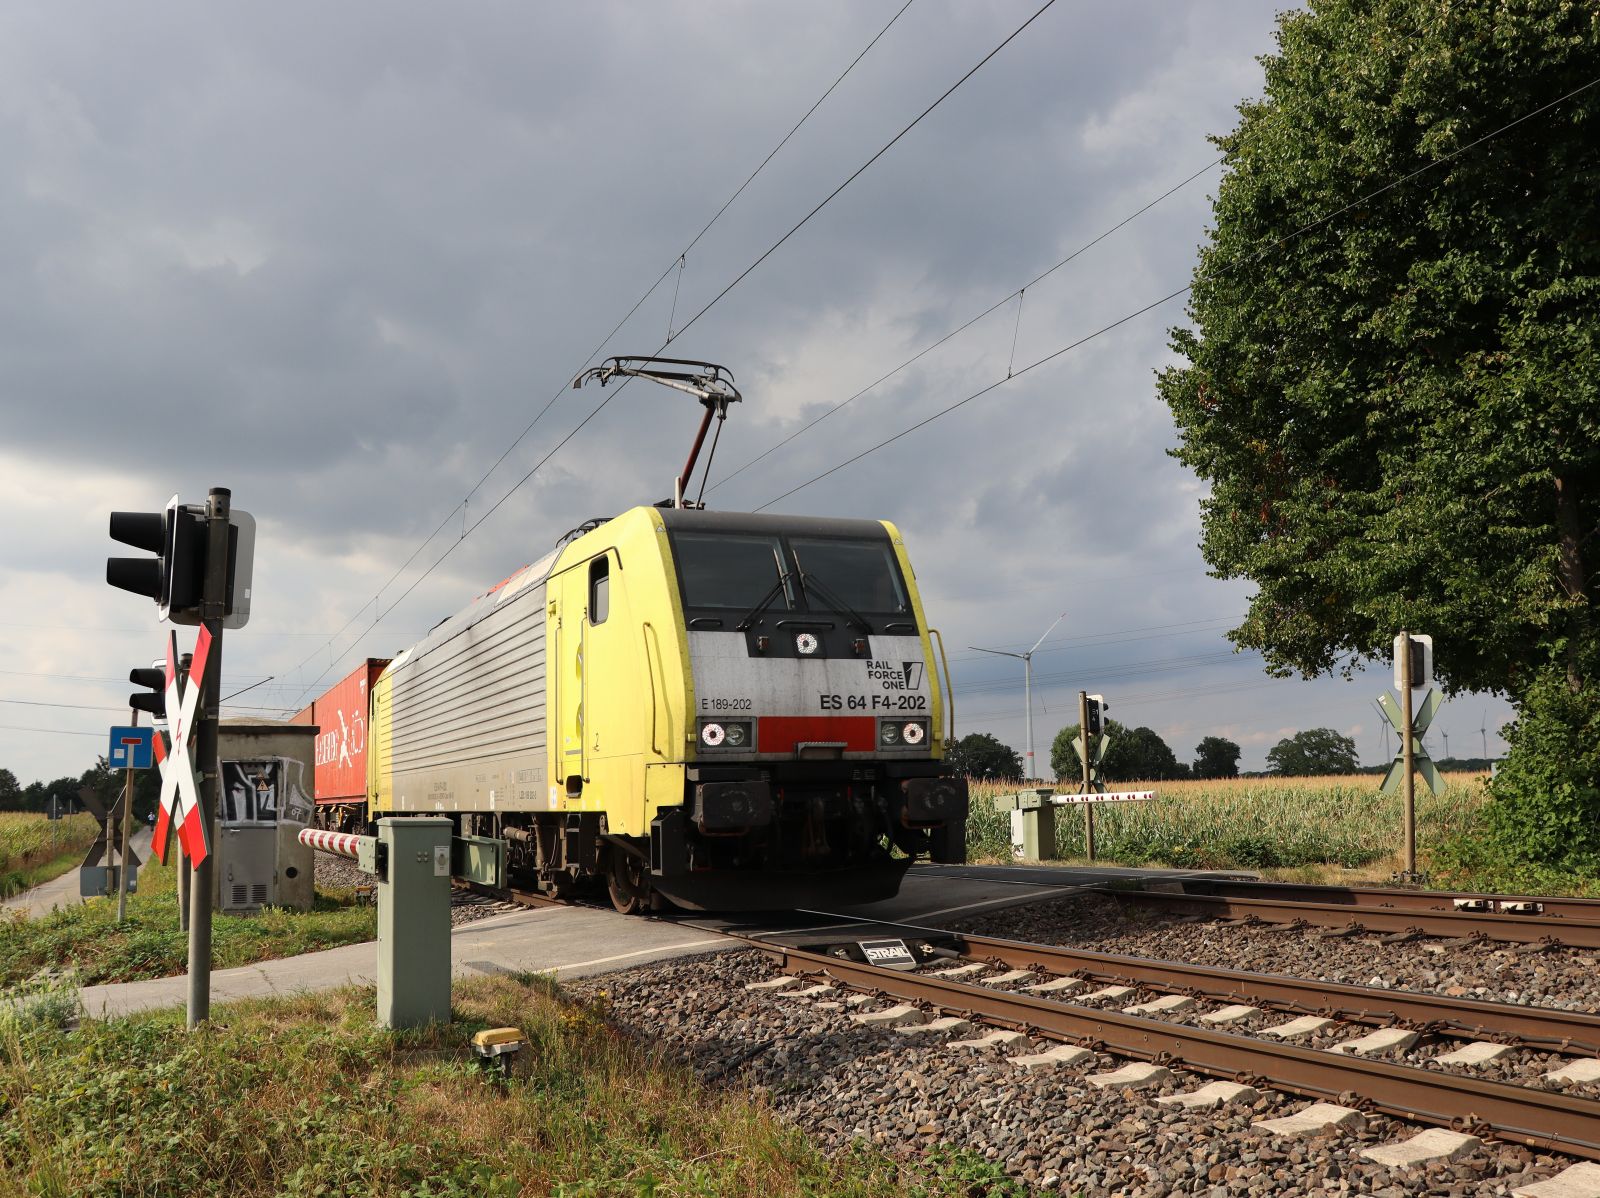 Rail Force One Lokomotive 189 202-5 ( 91 80 6189 202-5 D-DISPO ) bei Baahnbergang Wasserstrasse, Hamminkeln 18-08-2022.

Rail Force One locomotief 189 202-5 ( 91 80 6189 202-5 D-DISPO ) bij overweg Wasserstrasse, Hamminkeln 18-08-2022.